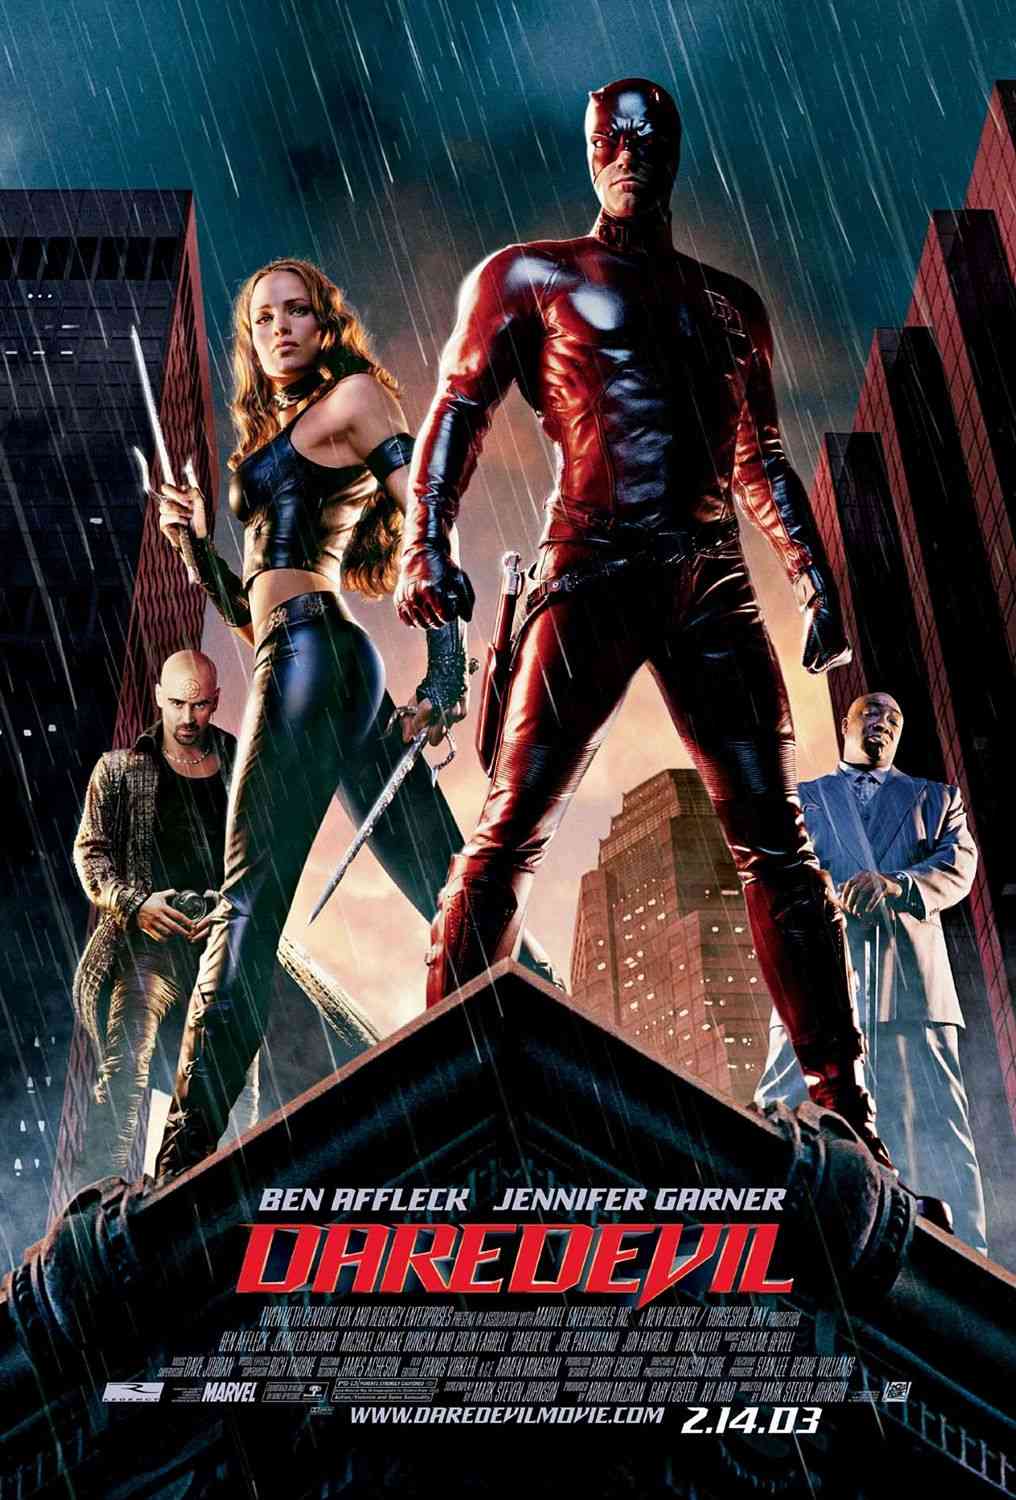 FULL MOVIE: Daredevil (2003) [Action]